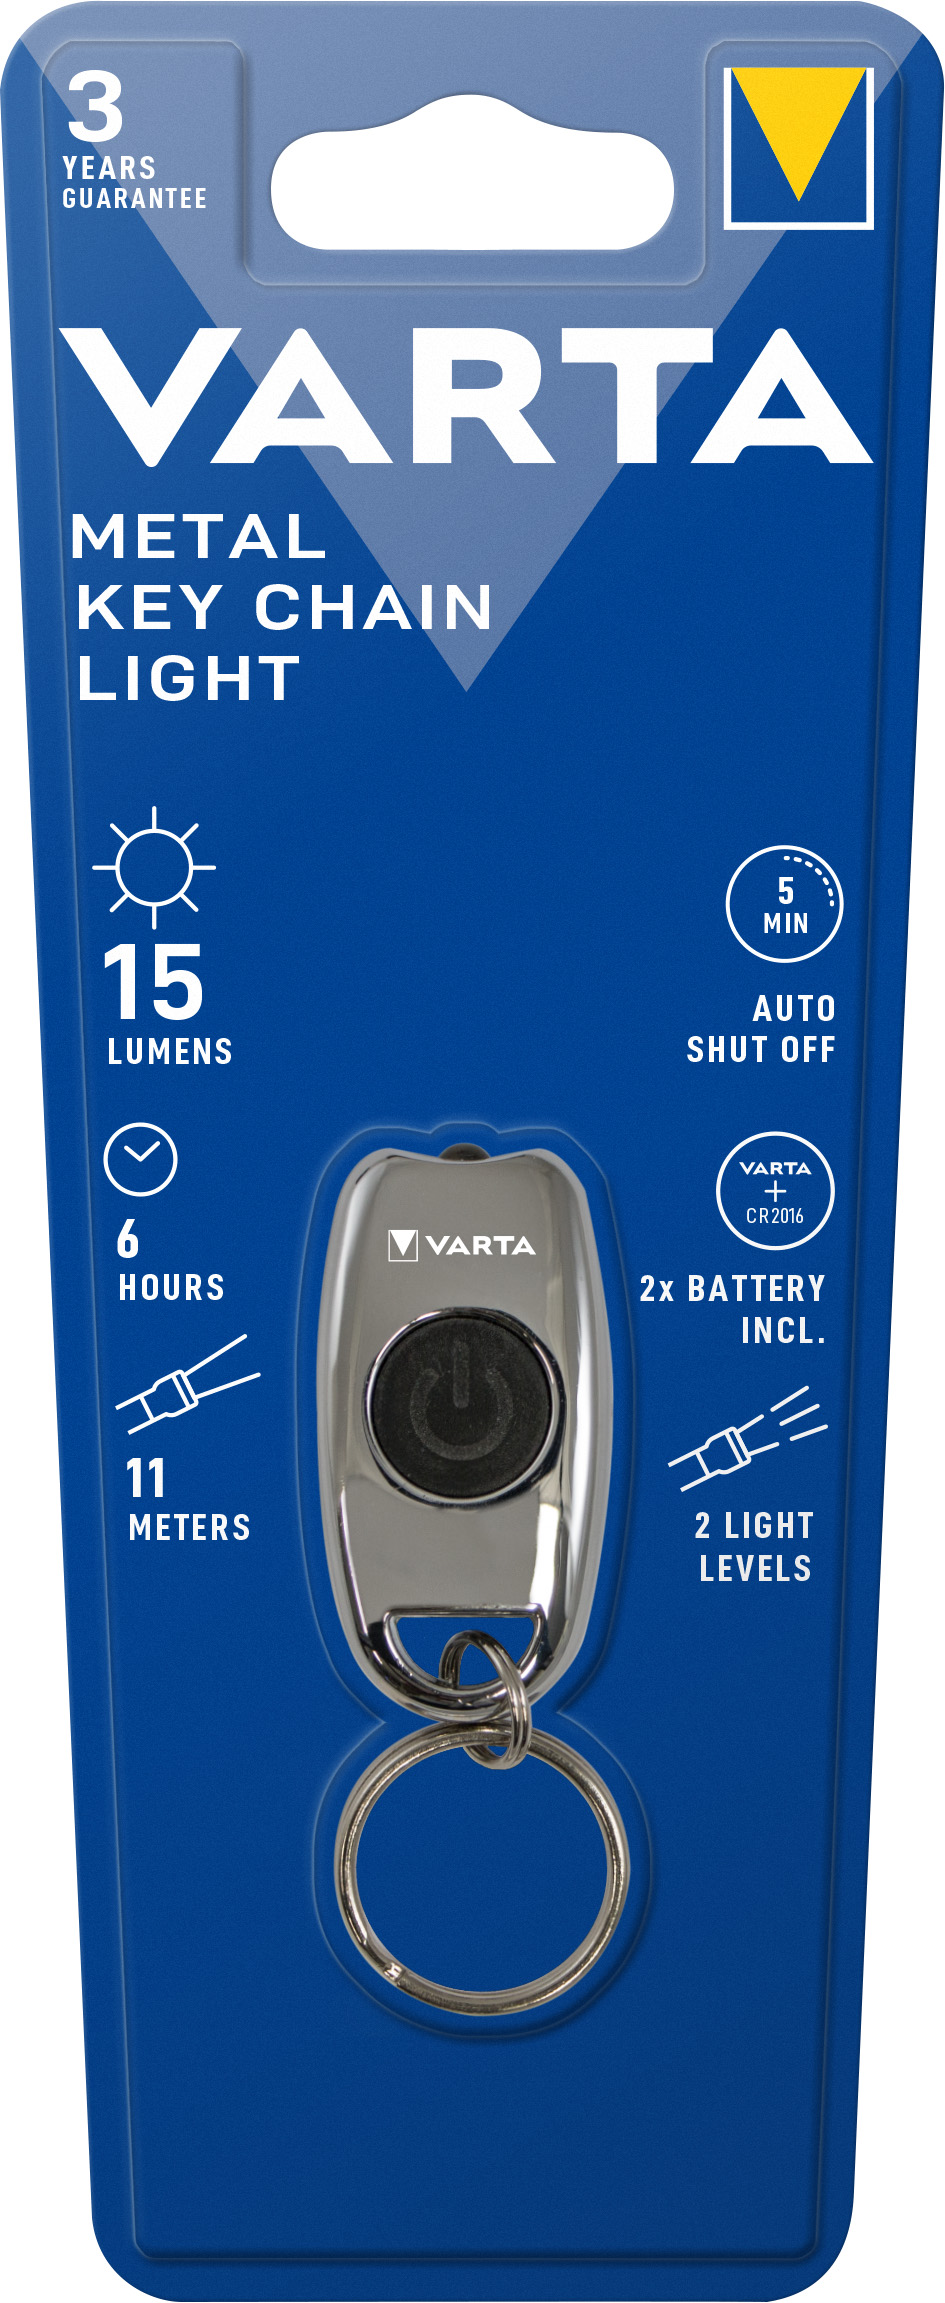 Varta LED Taschenlampe Metal Key Chain Light, 15lm, inkl. 2x Knopfzelle CR2016, Retail Blister